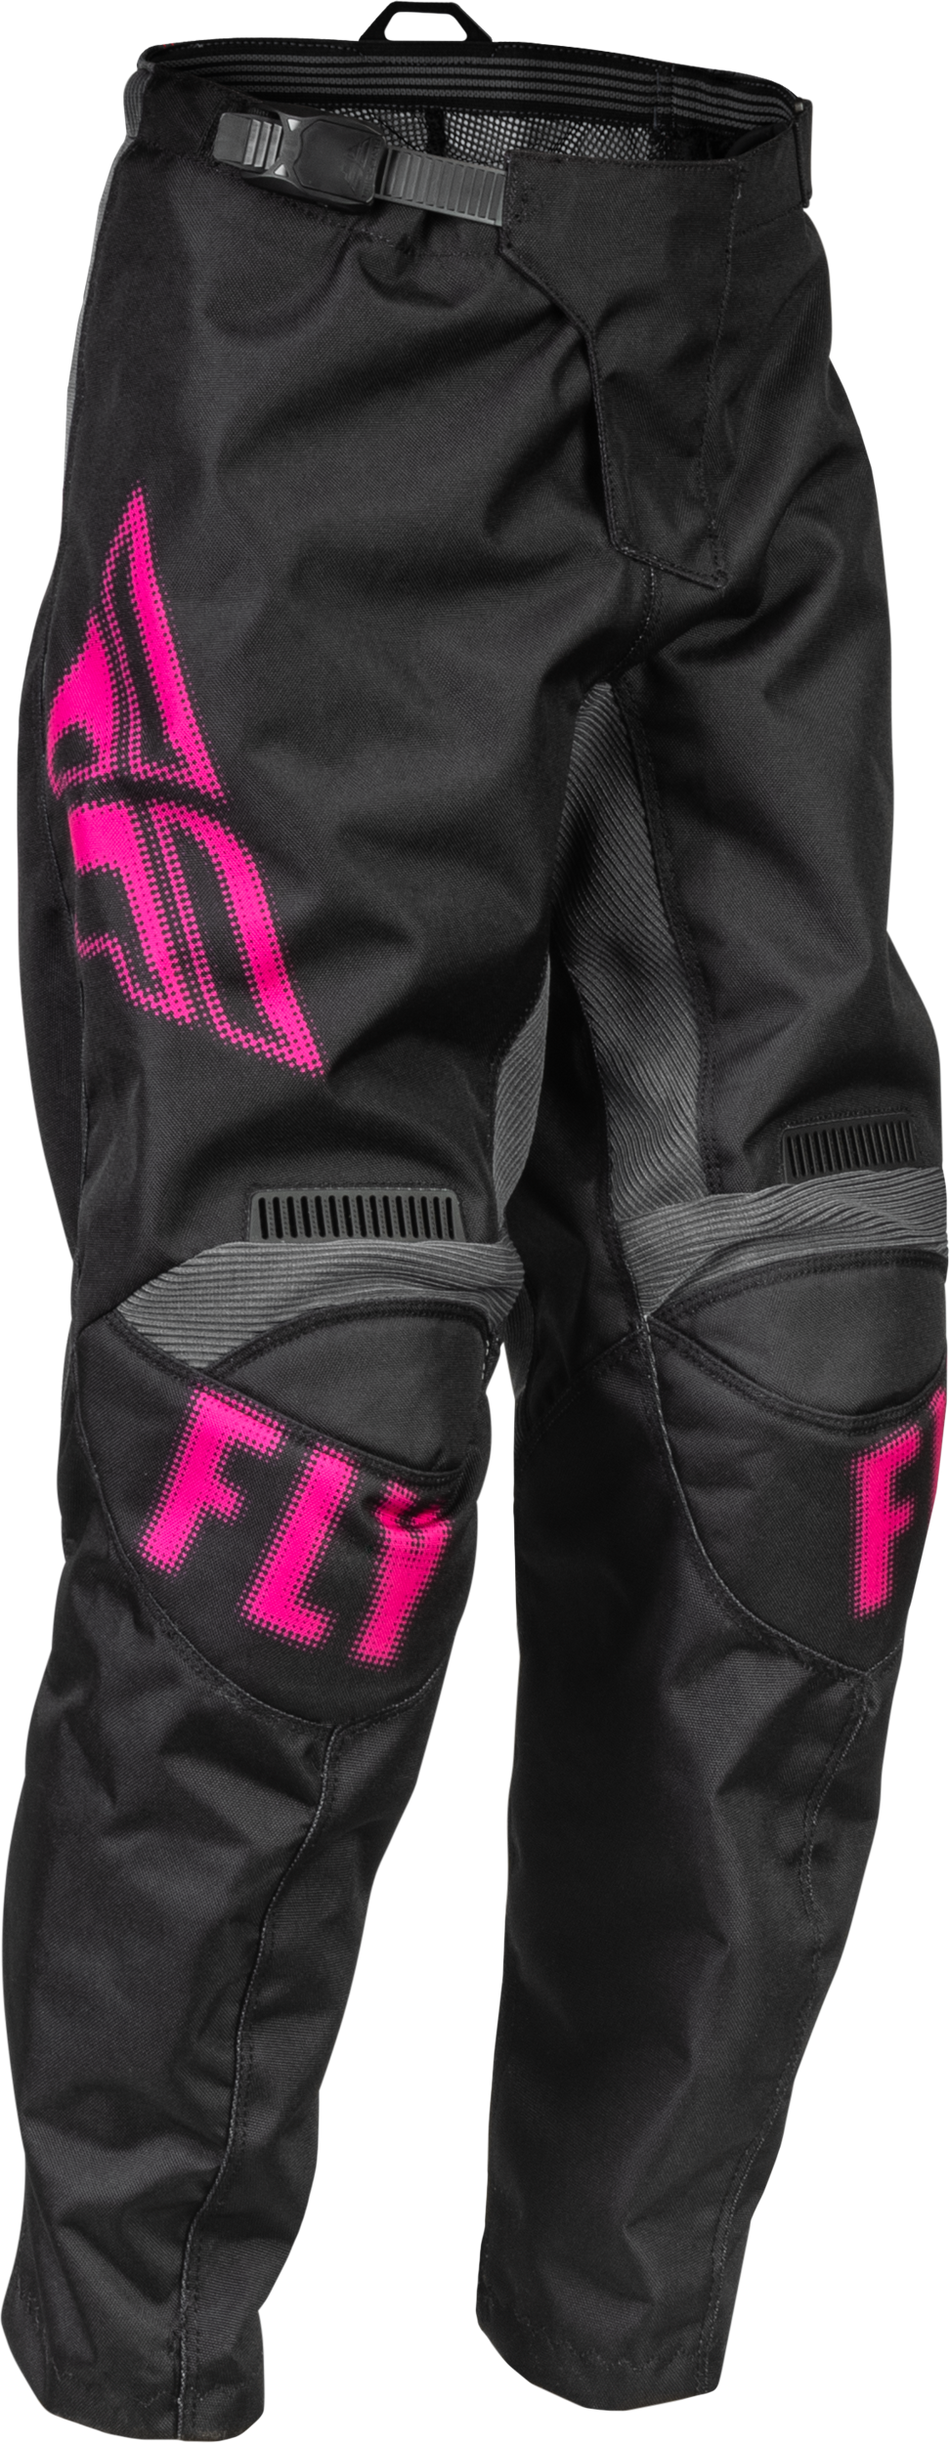 FLY RACING Youth F-16 Pants Black/Pink Sz 26 376-23126